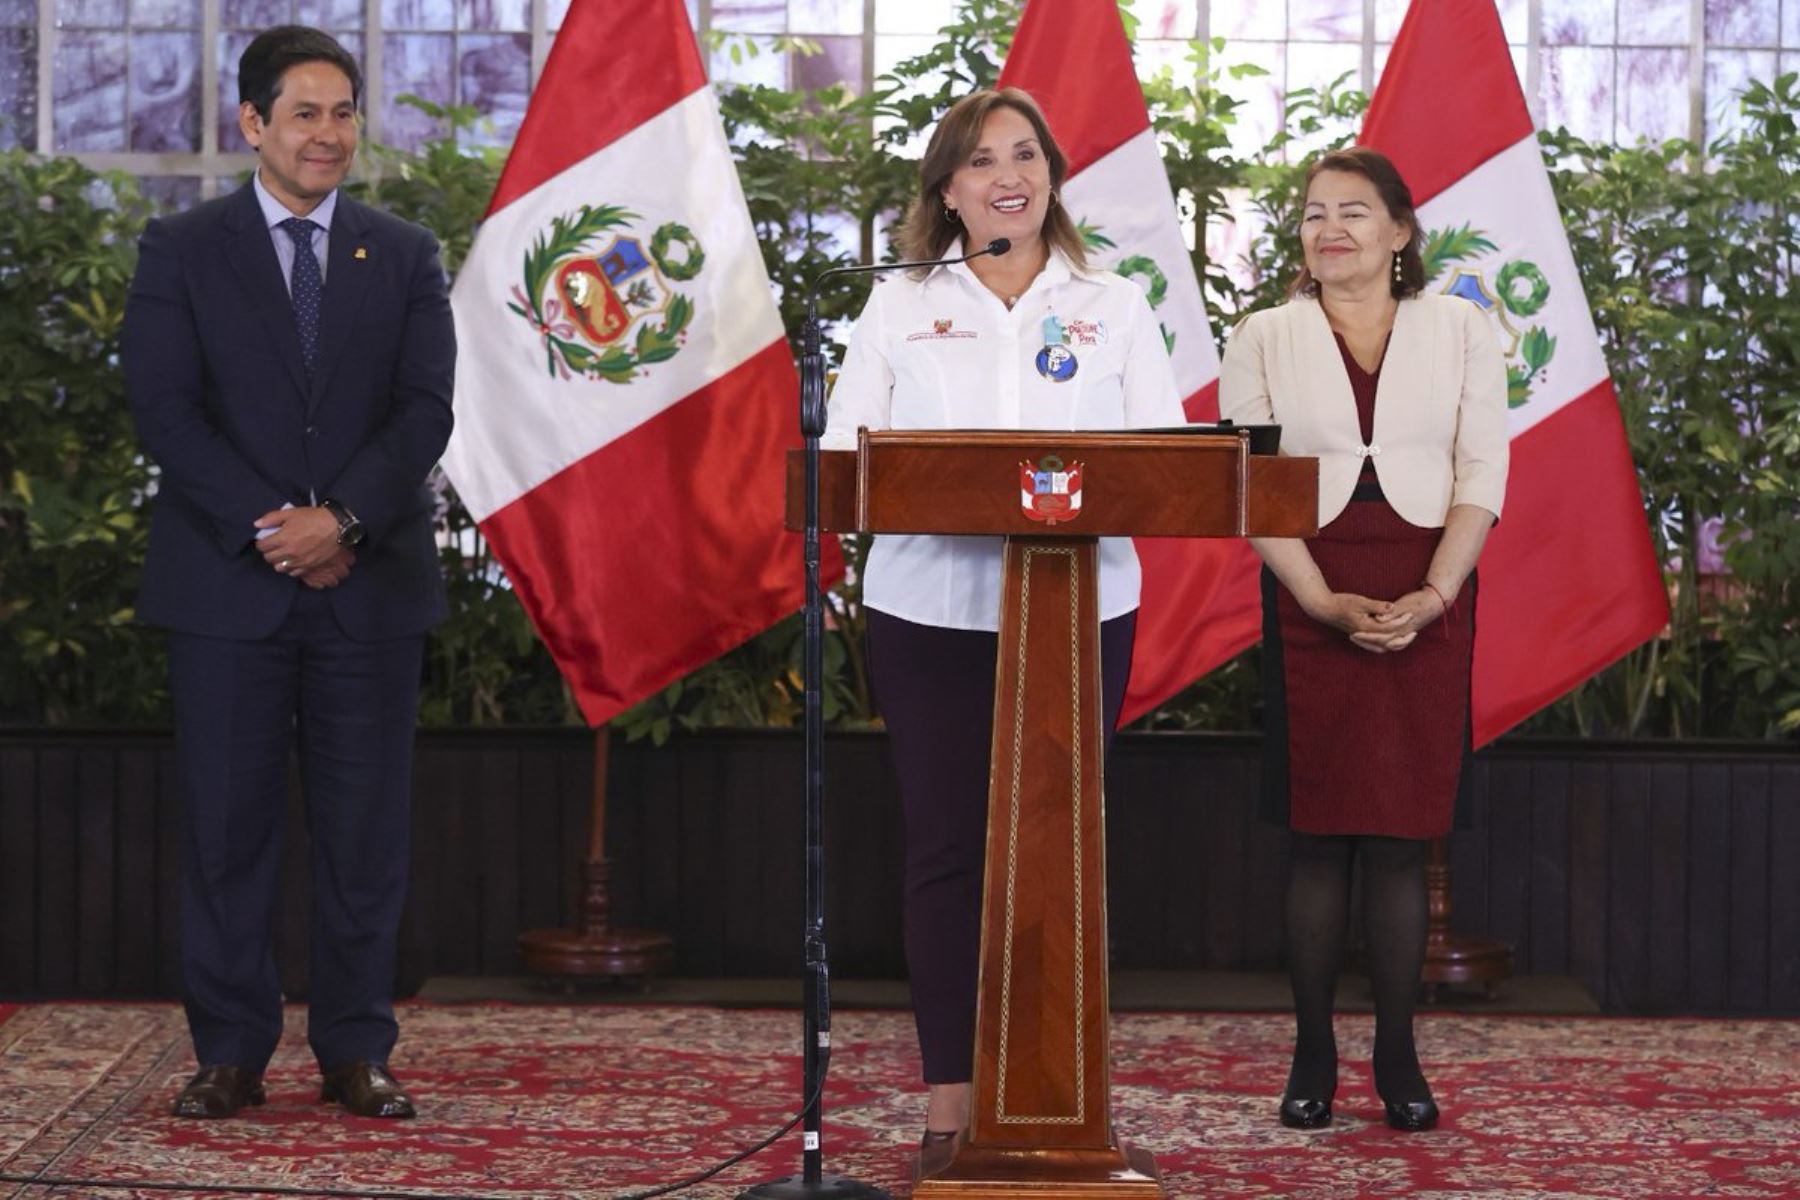 Peru's President US26.6 million budget for feeding program secured